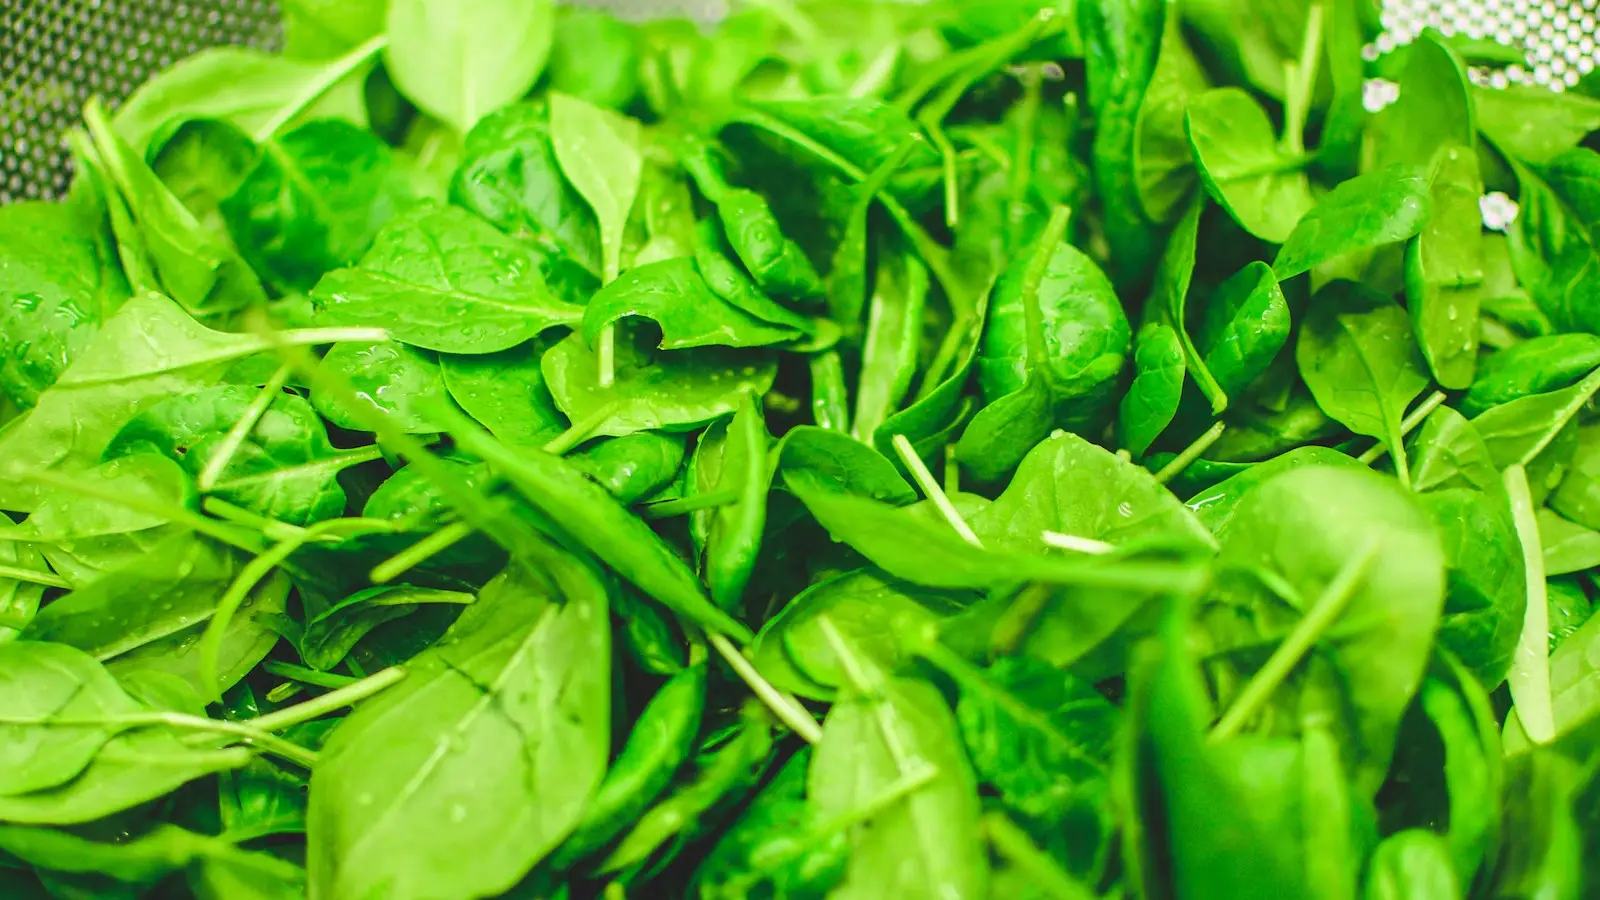 Lysine/Arginine Guide for Spinach